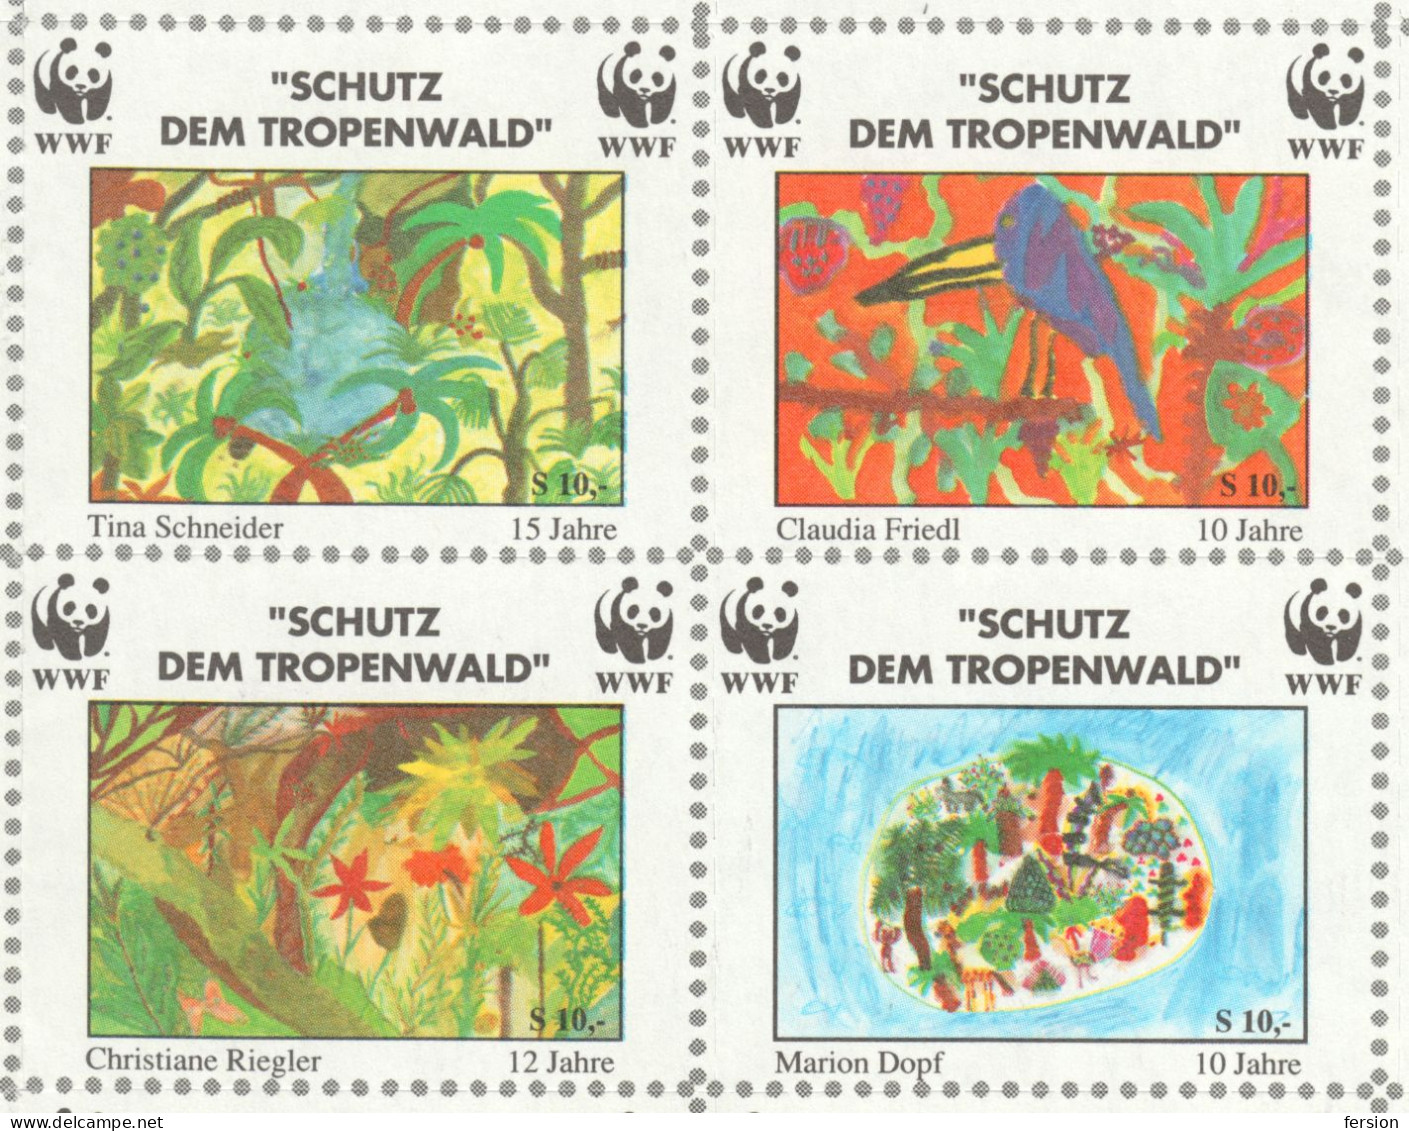 WWF W.W.F. Austria 1991 charity LABEL CINDERELLA VIGNETTE - mole parrot crocodile lion frog monkey elephant butterfly